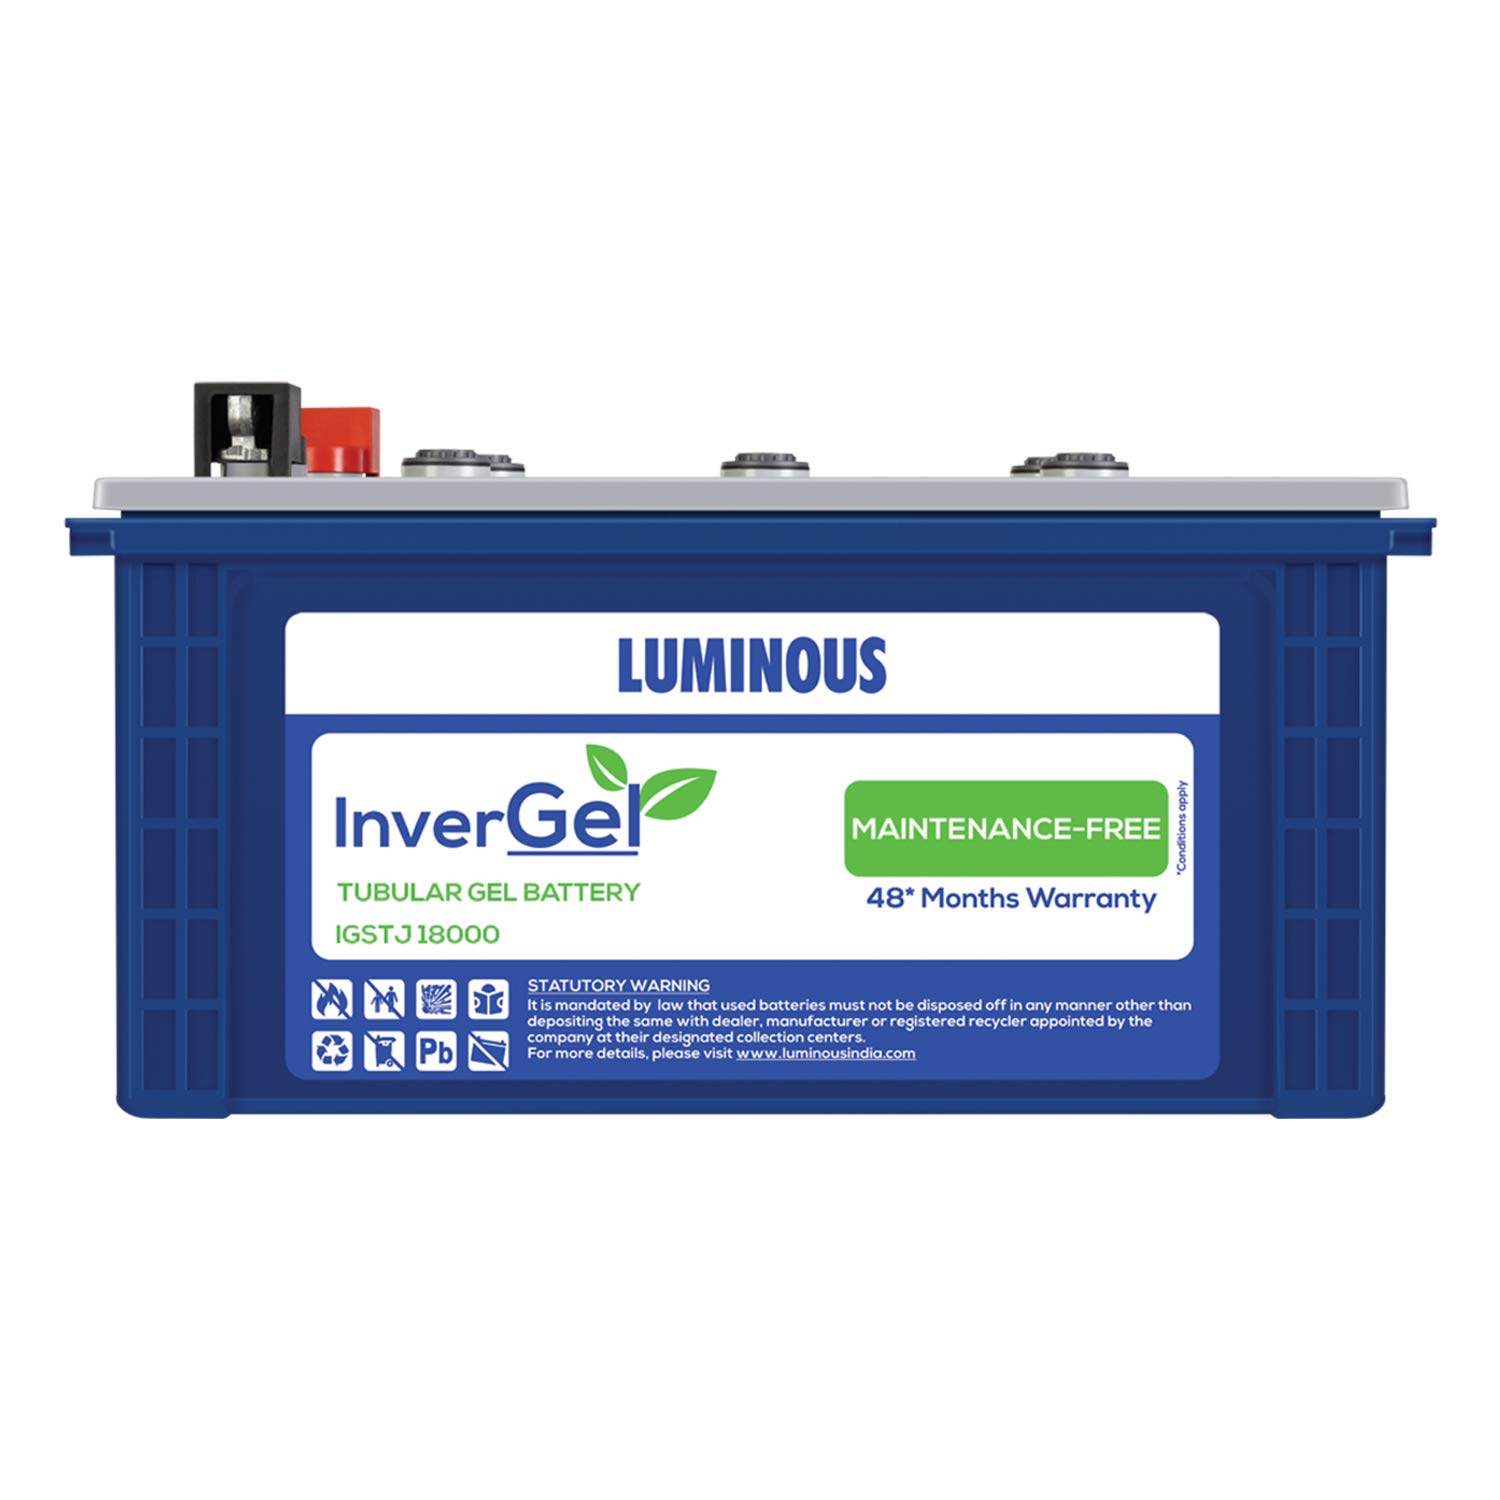 Luminous InverGel IGSTJ 18000 150 Ah Gel Tubular Battery